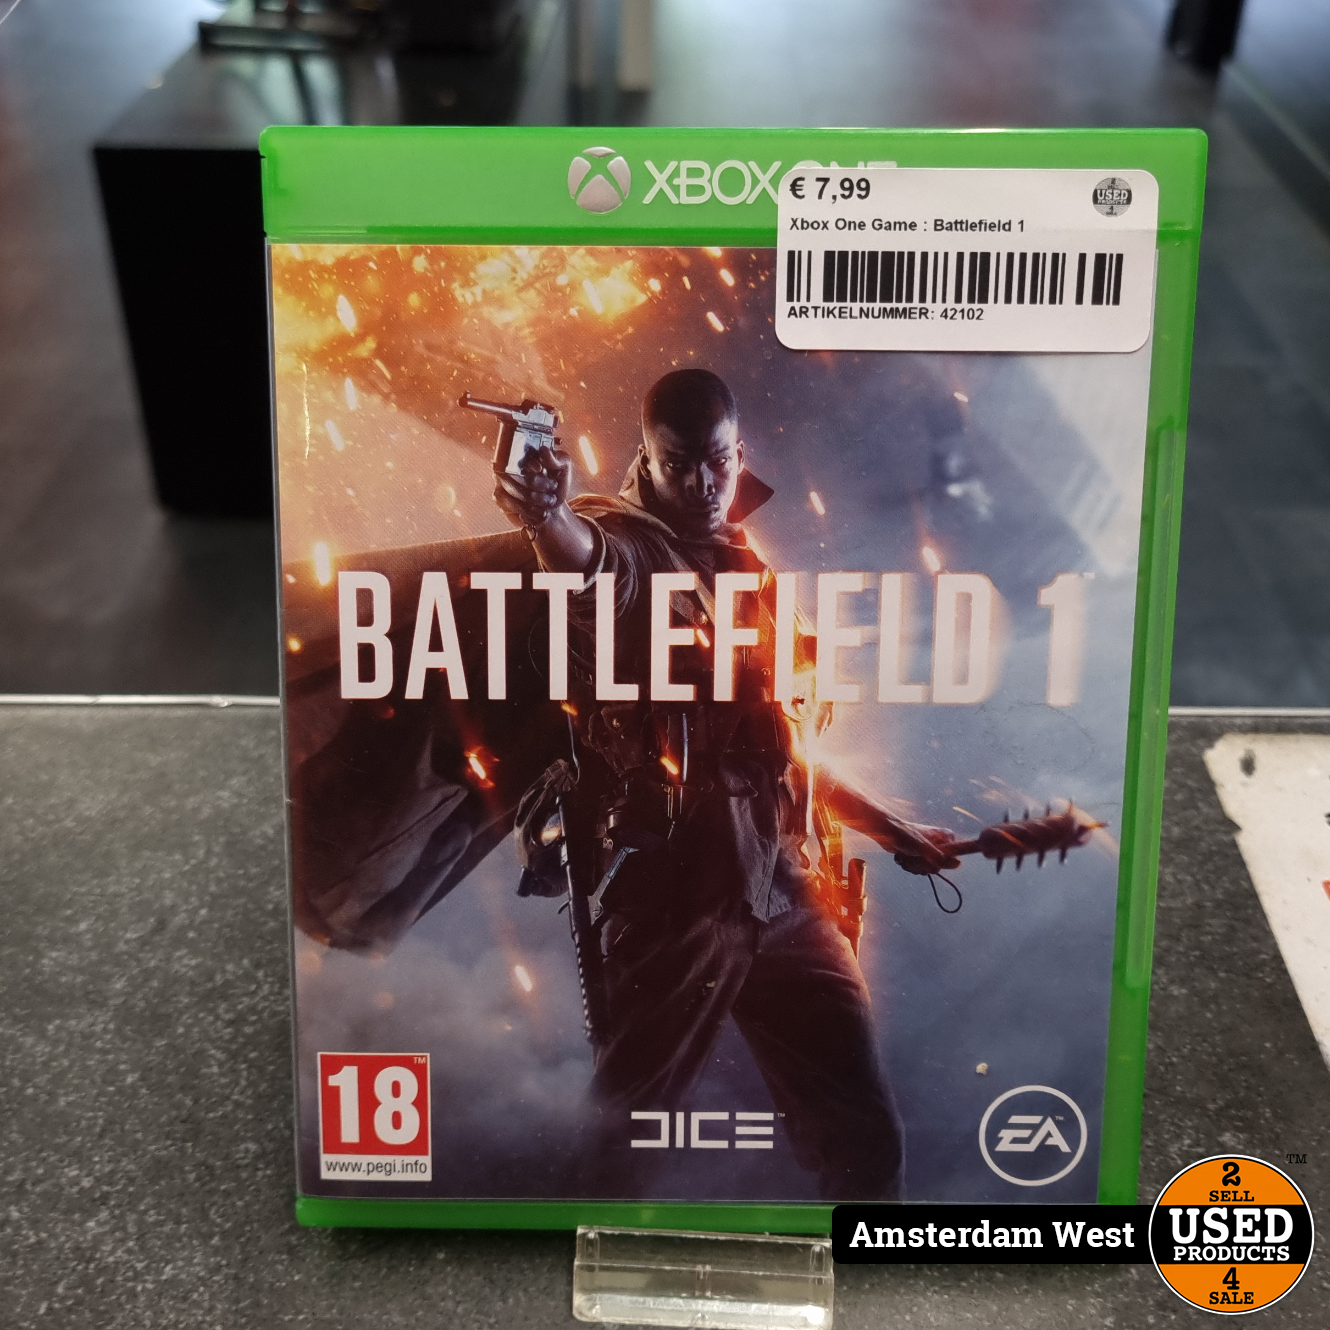 voorstel Onverenigbaar dubbellaag xbox one Xbox One Game : Battlefield 1 - Used Products Amsterdam West